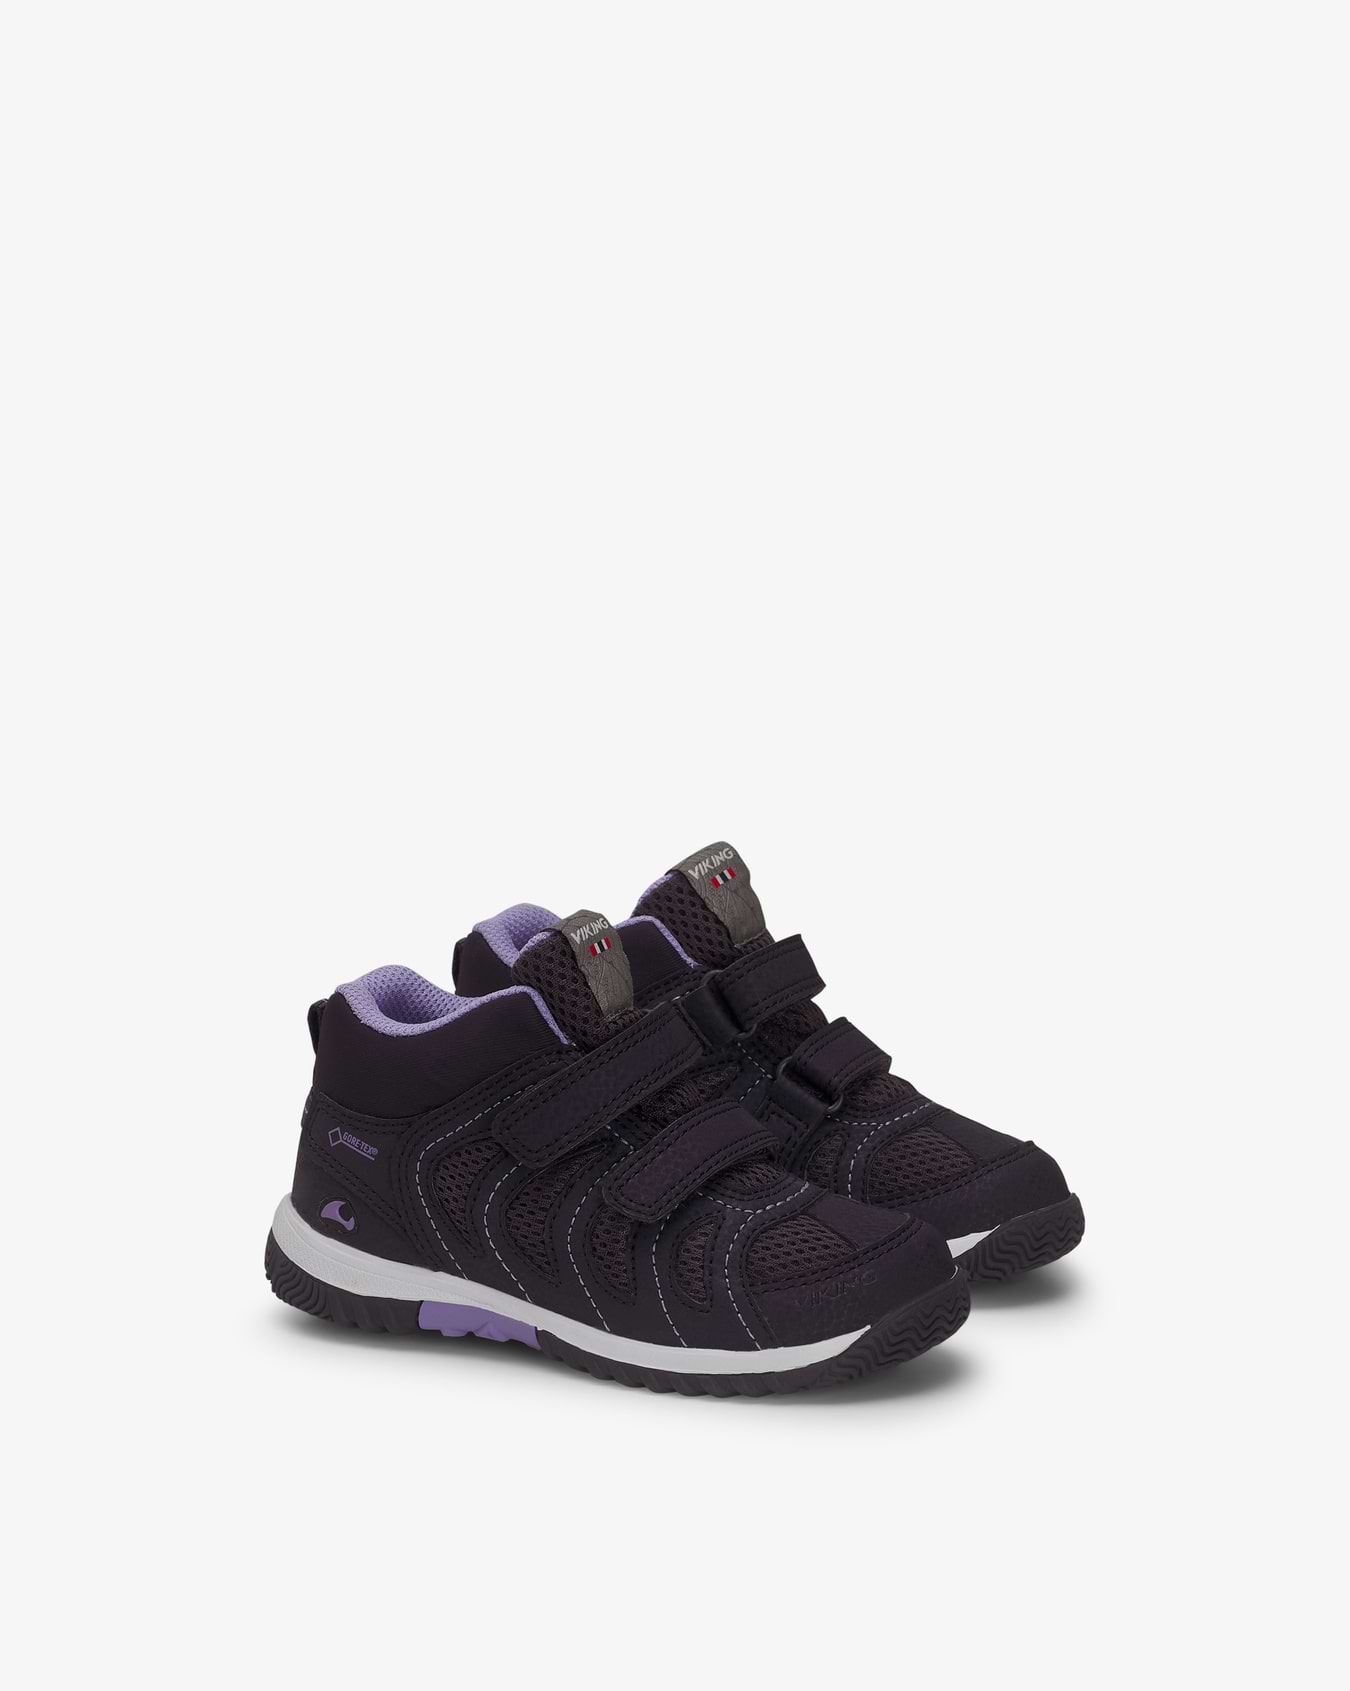 Cascade Mid III GTX Mid Grey/Violet Sneakers